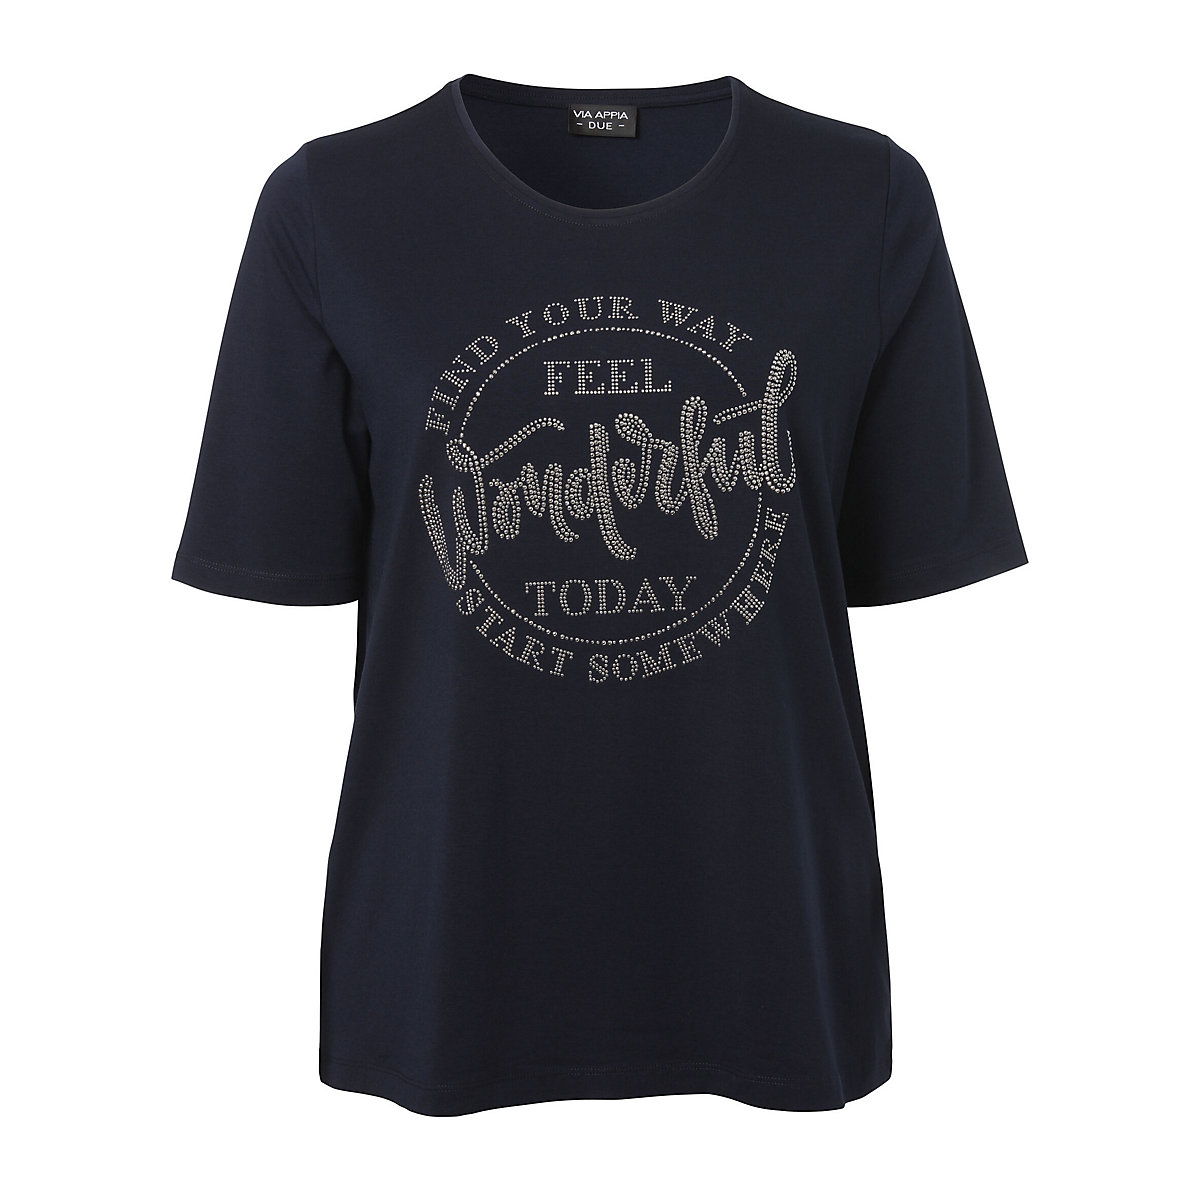 Via Appia T-Shirt für Mädchen dunkelblau